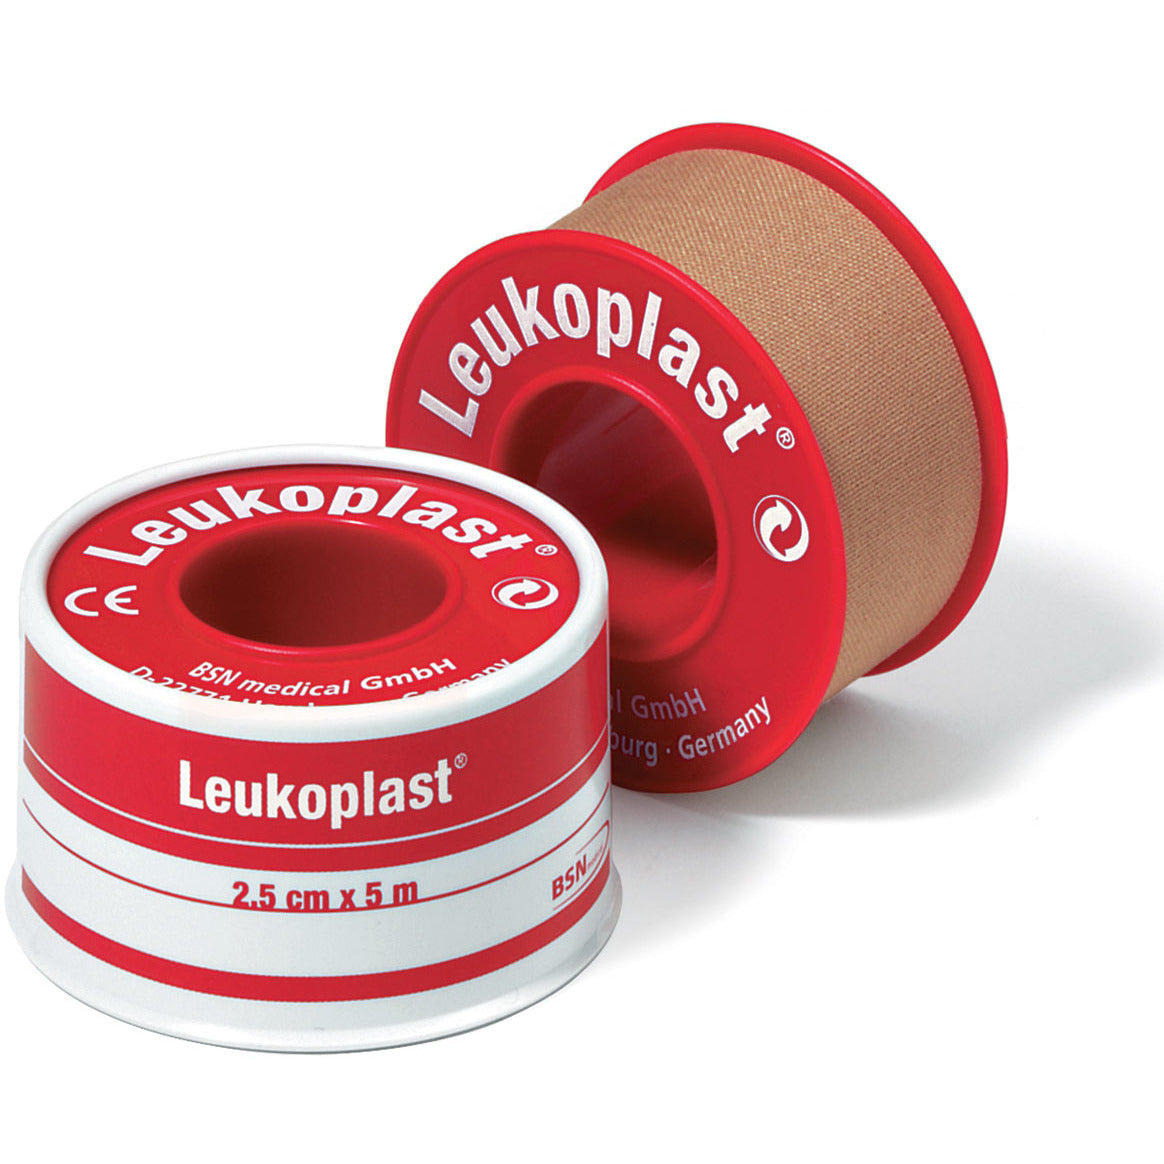 Leukoplast Zinc Oxide Adhesive Tape - 5cm x 5m per Roll